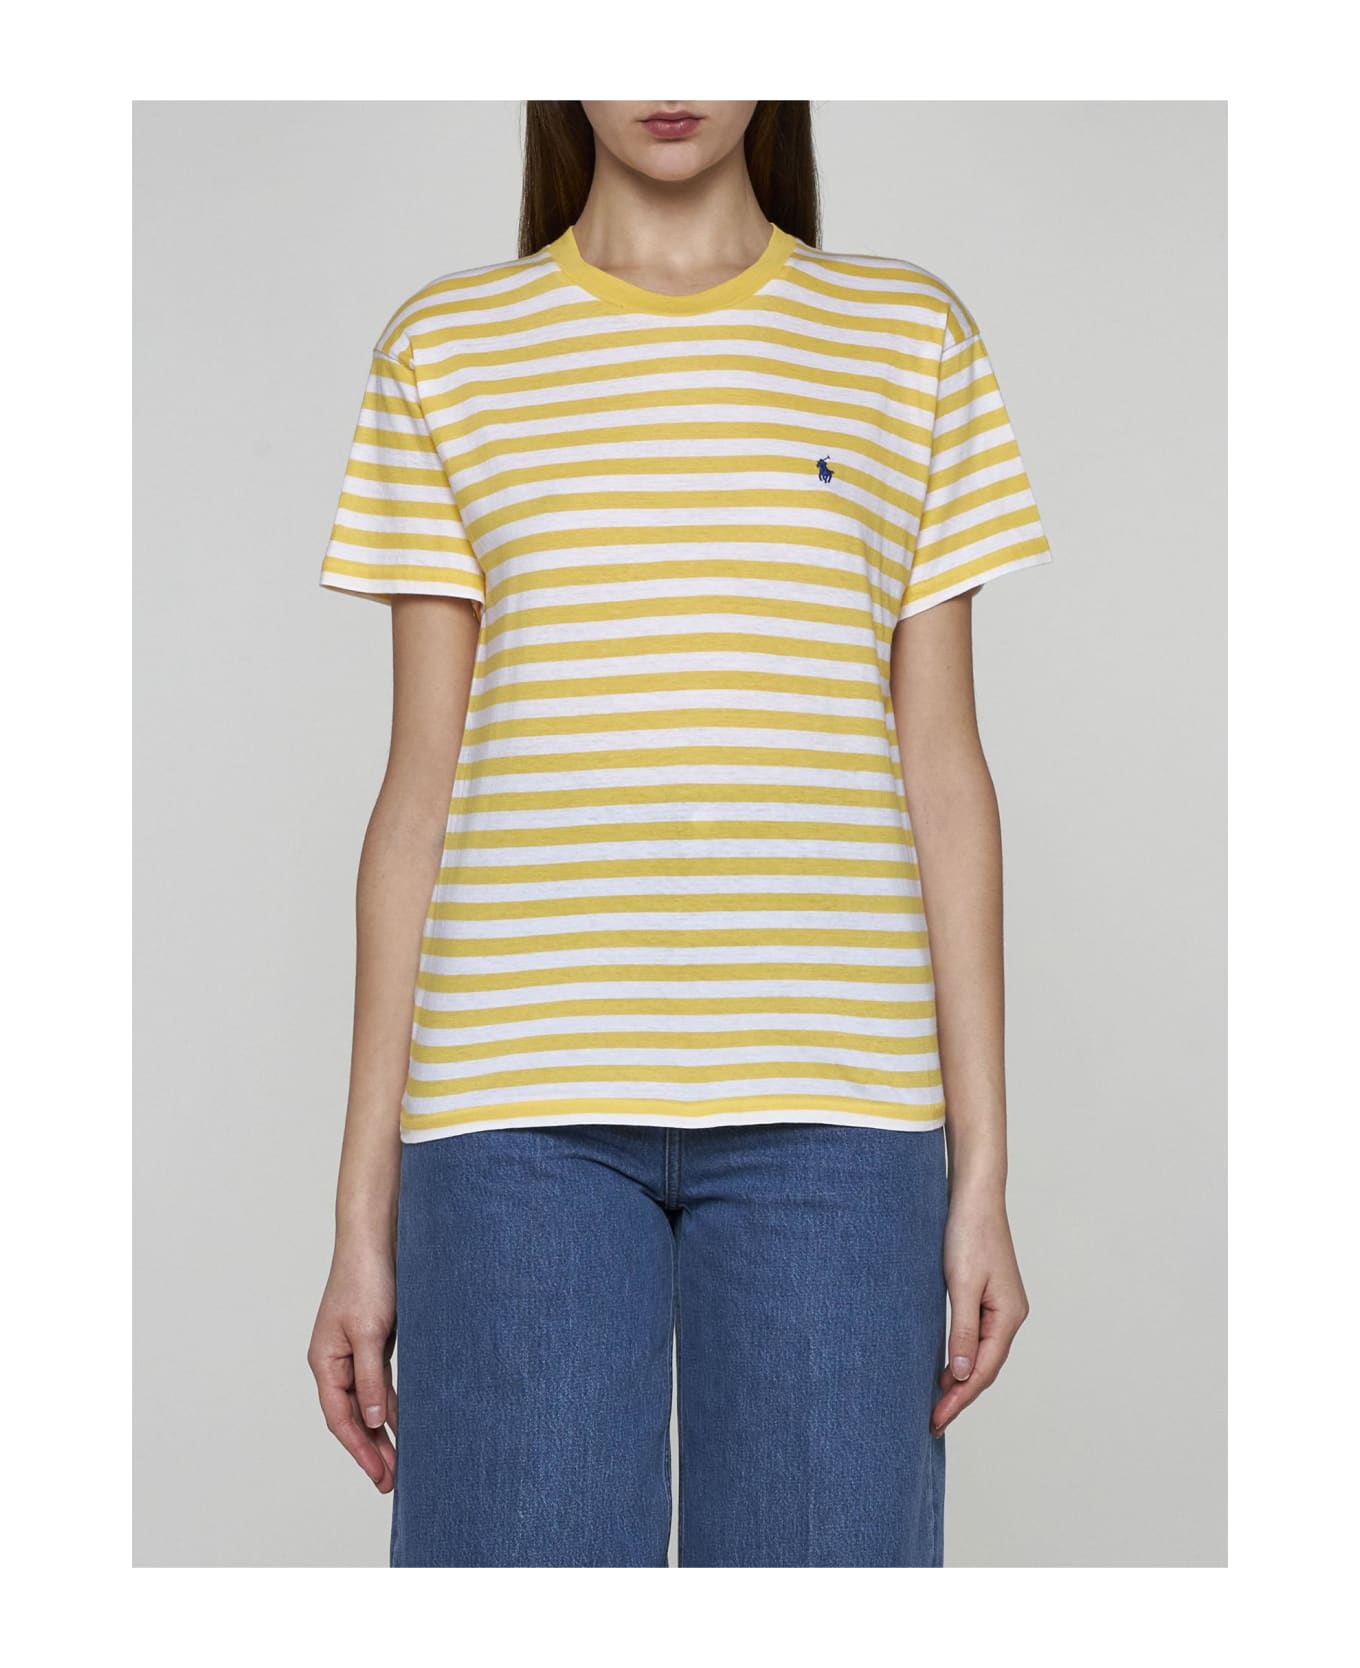 Ralph Lauren Striped Cotton T-shirt - Chrome Yellow White Tシャツ